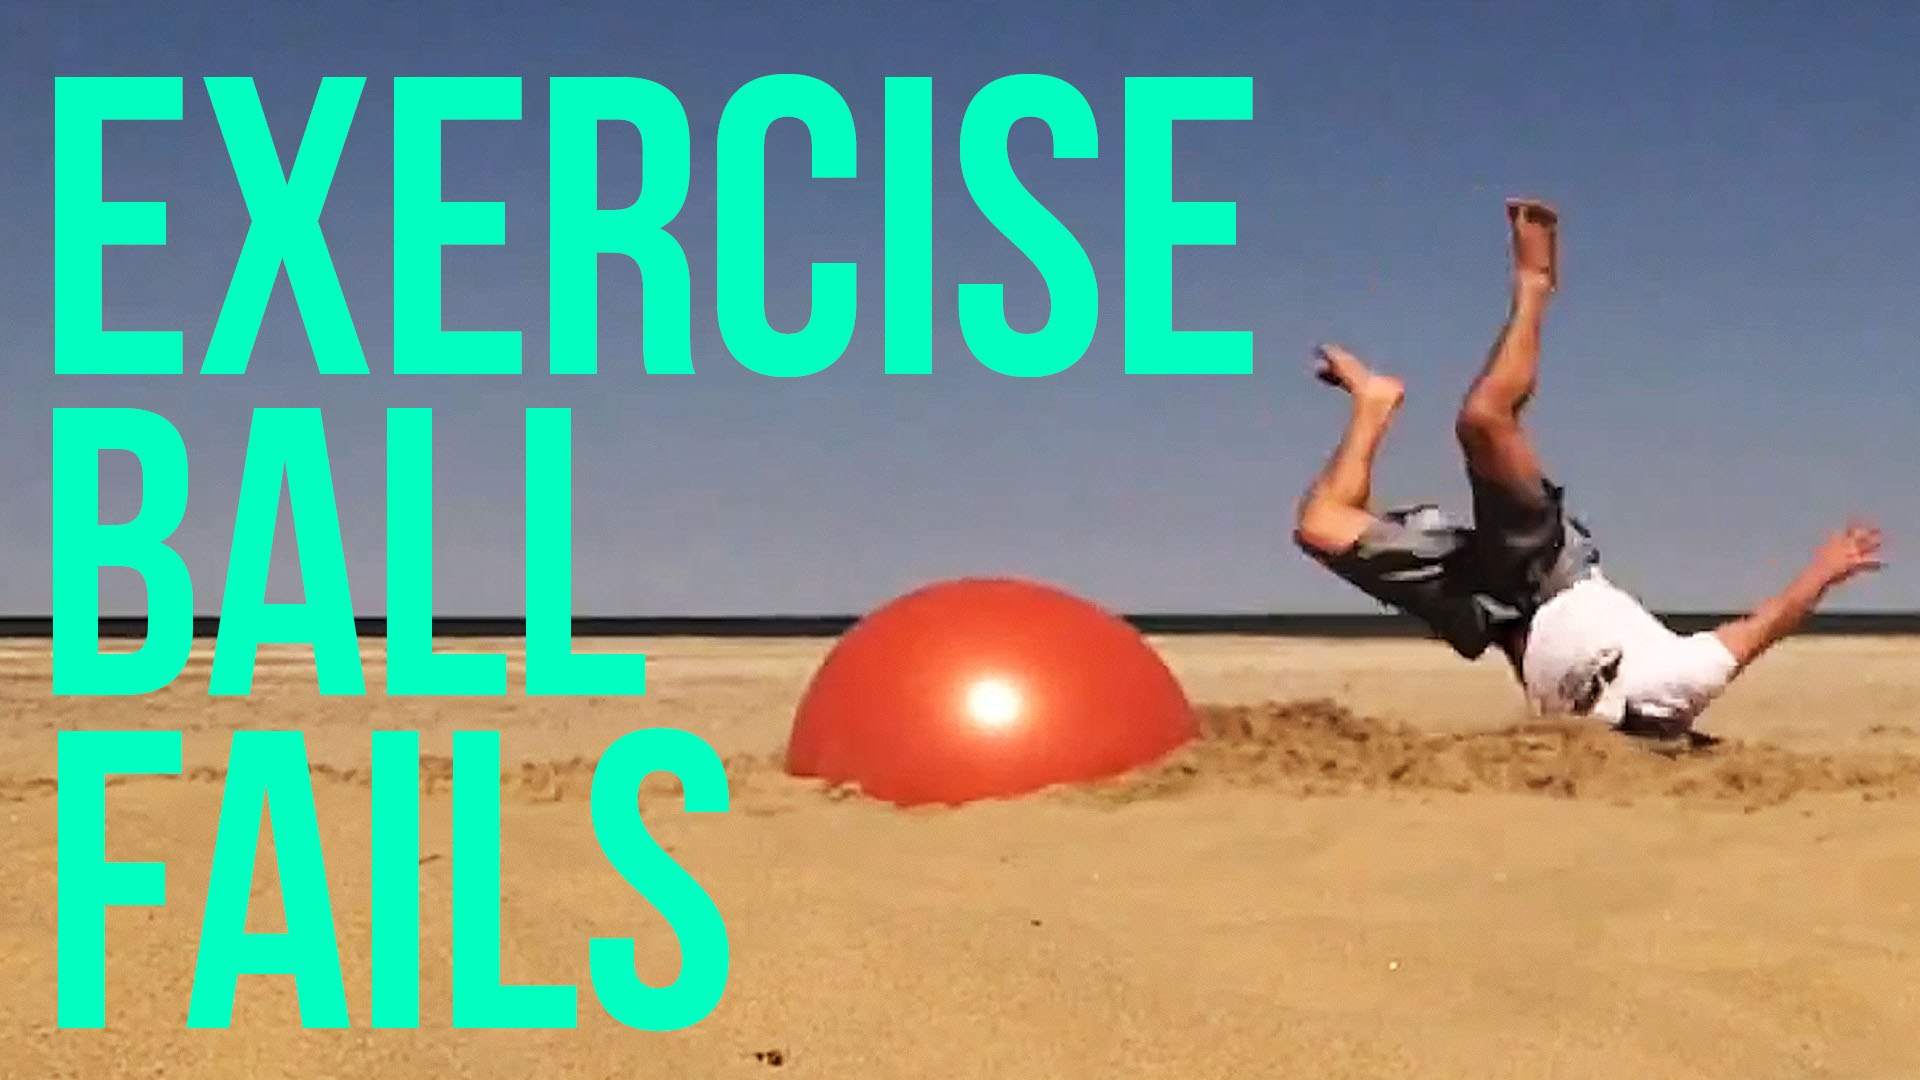 Epic Exercise Ball Fails || FailArmy - video Dailymotion